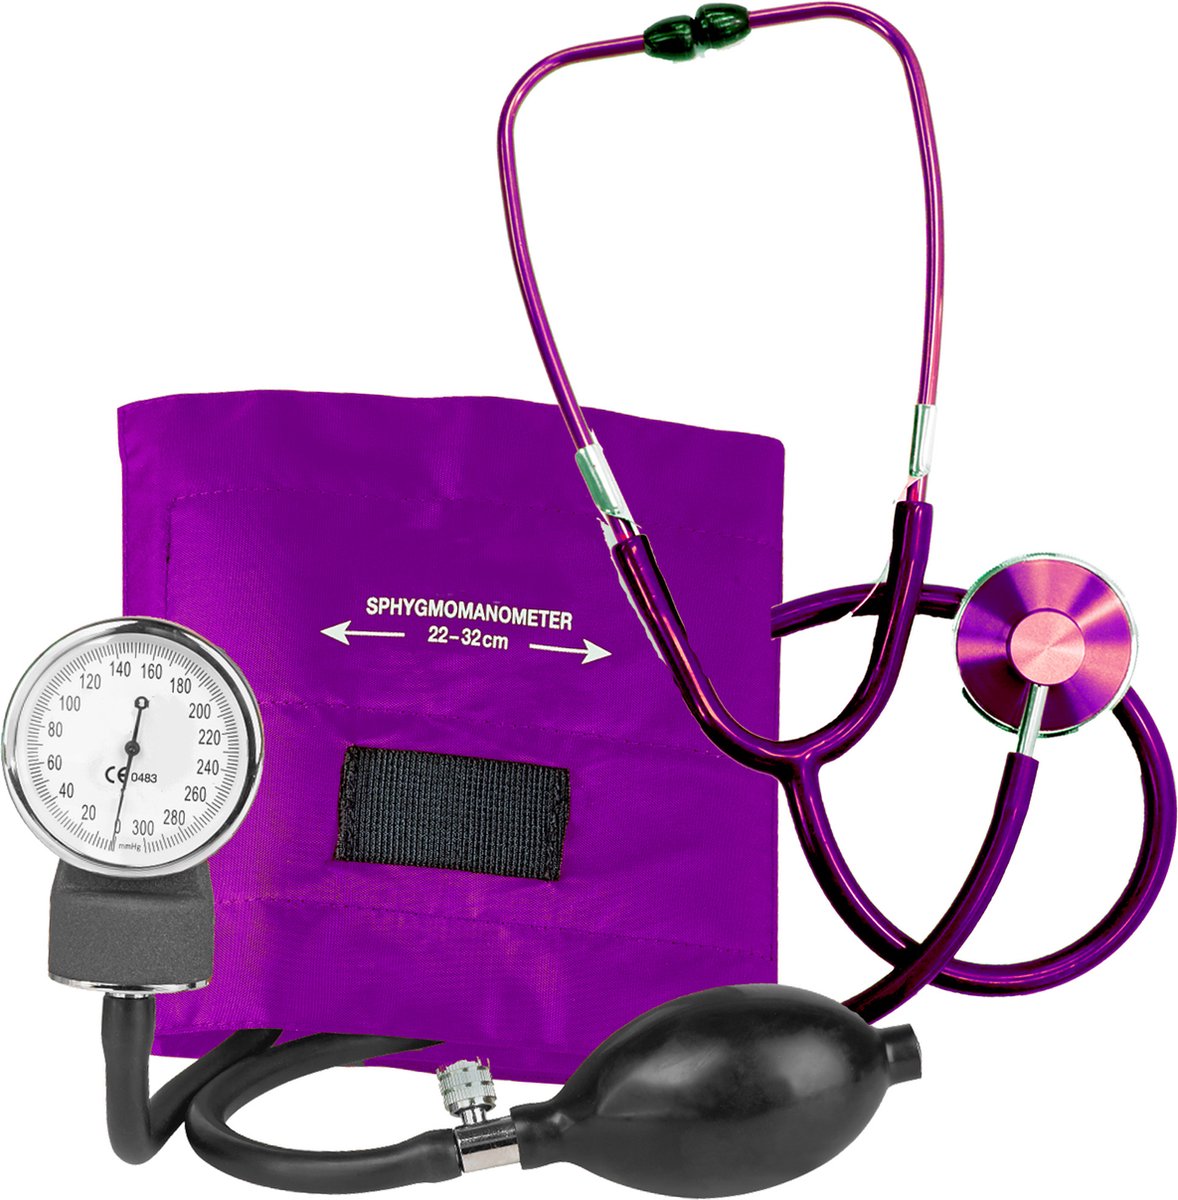 Handmatige Bloeddrukmeter met stethoscoop voor Verpleegkundige - Paars - Nurse